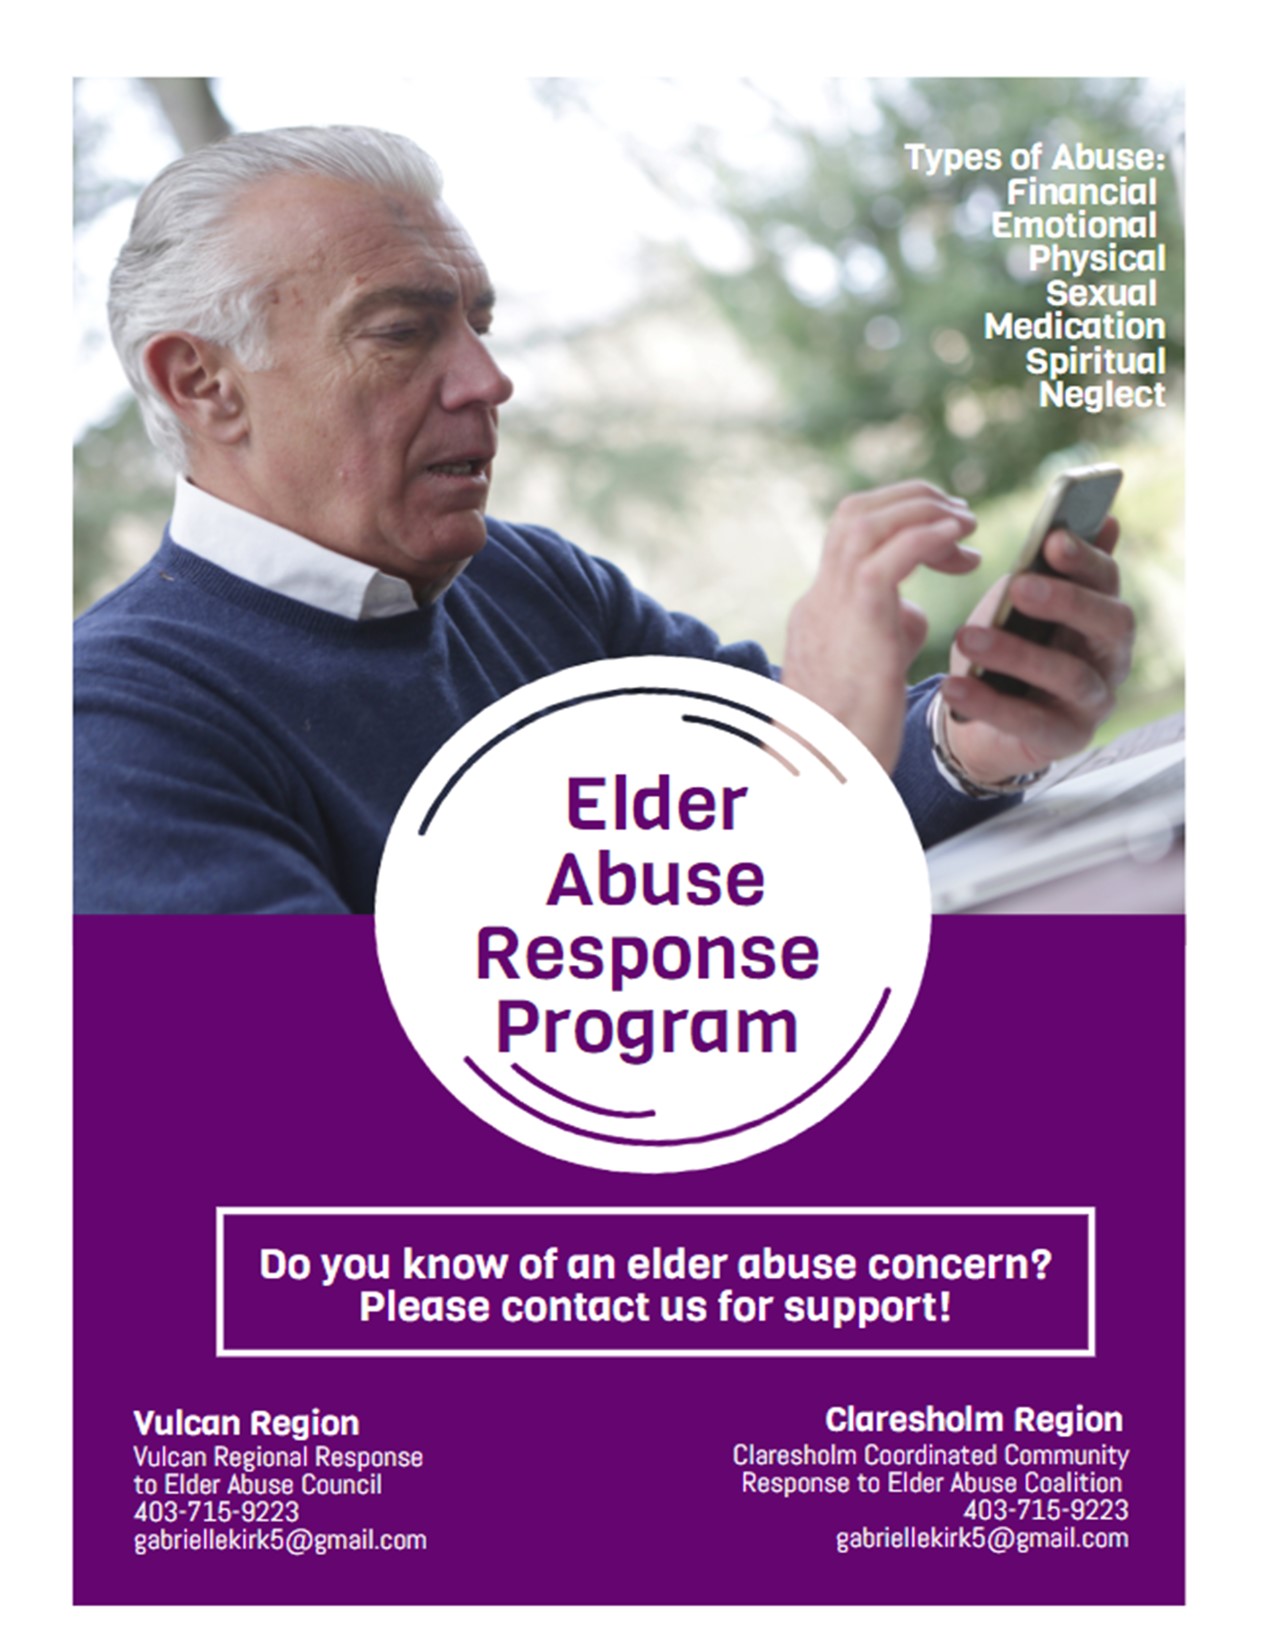 Vulcan Regional Response to Elder Abuse Council